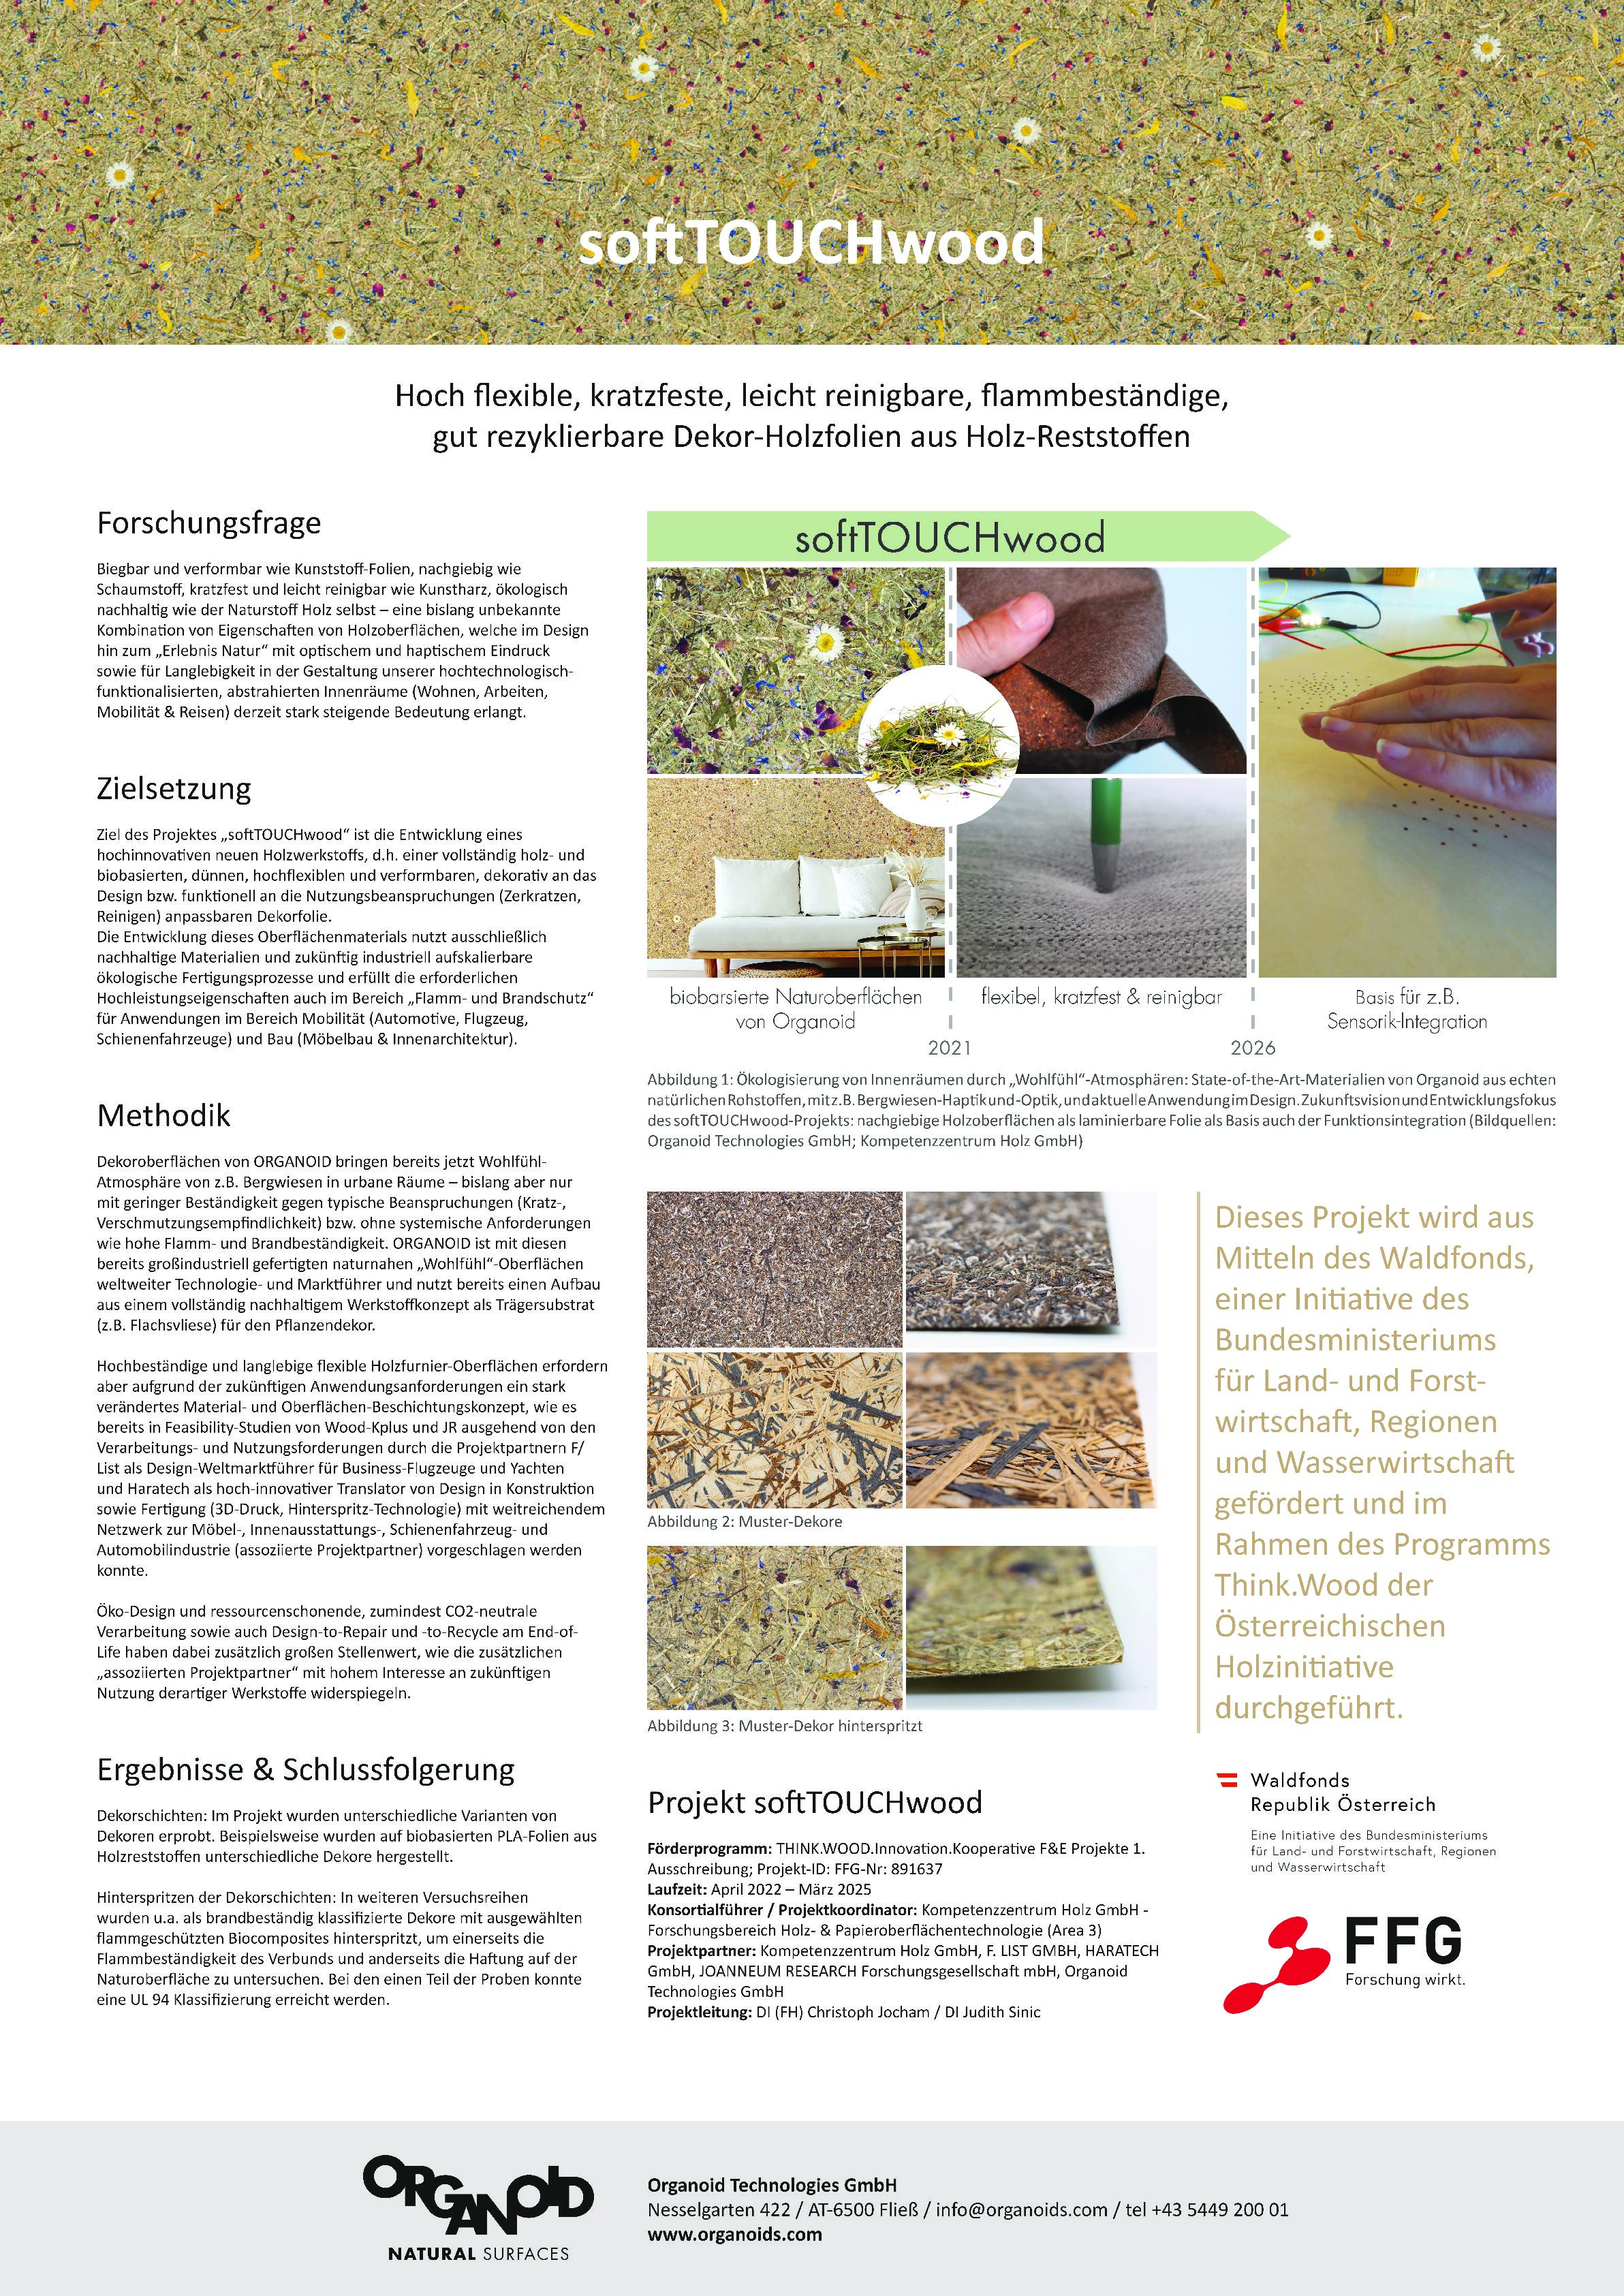 Bioeconomy-Austria-2023_Poster-session_Organoid-Projekt-softTOUCHwood_web.pdf